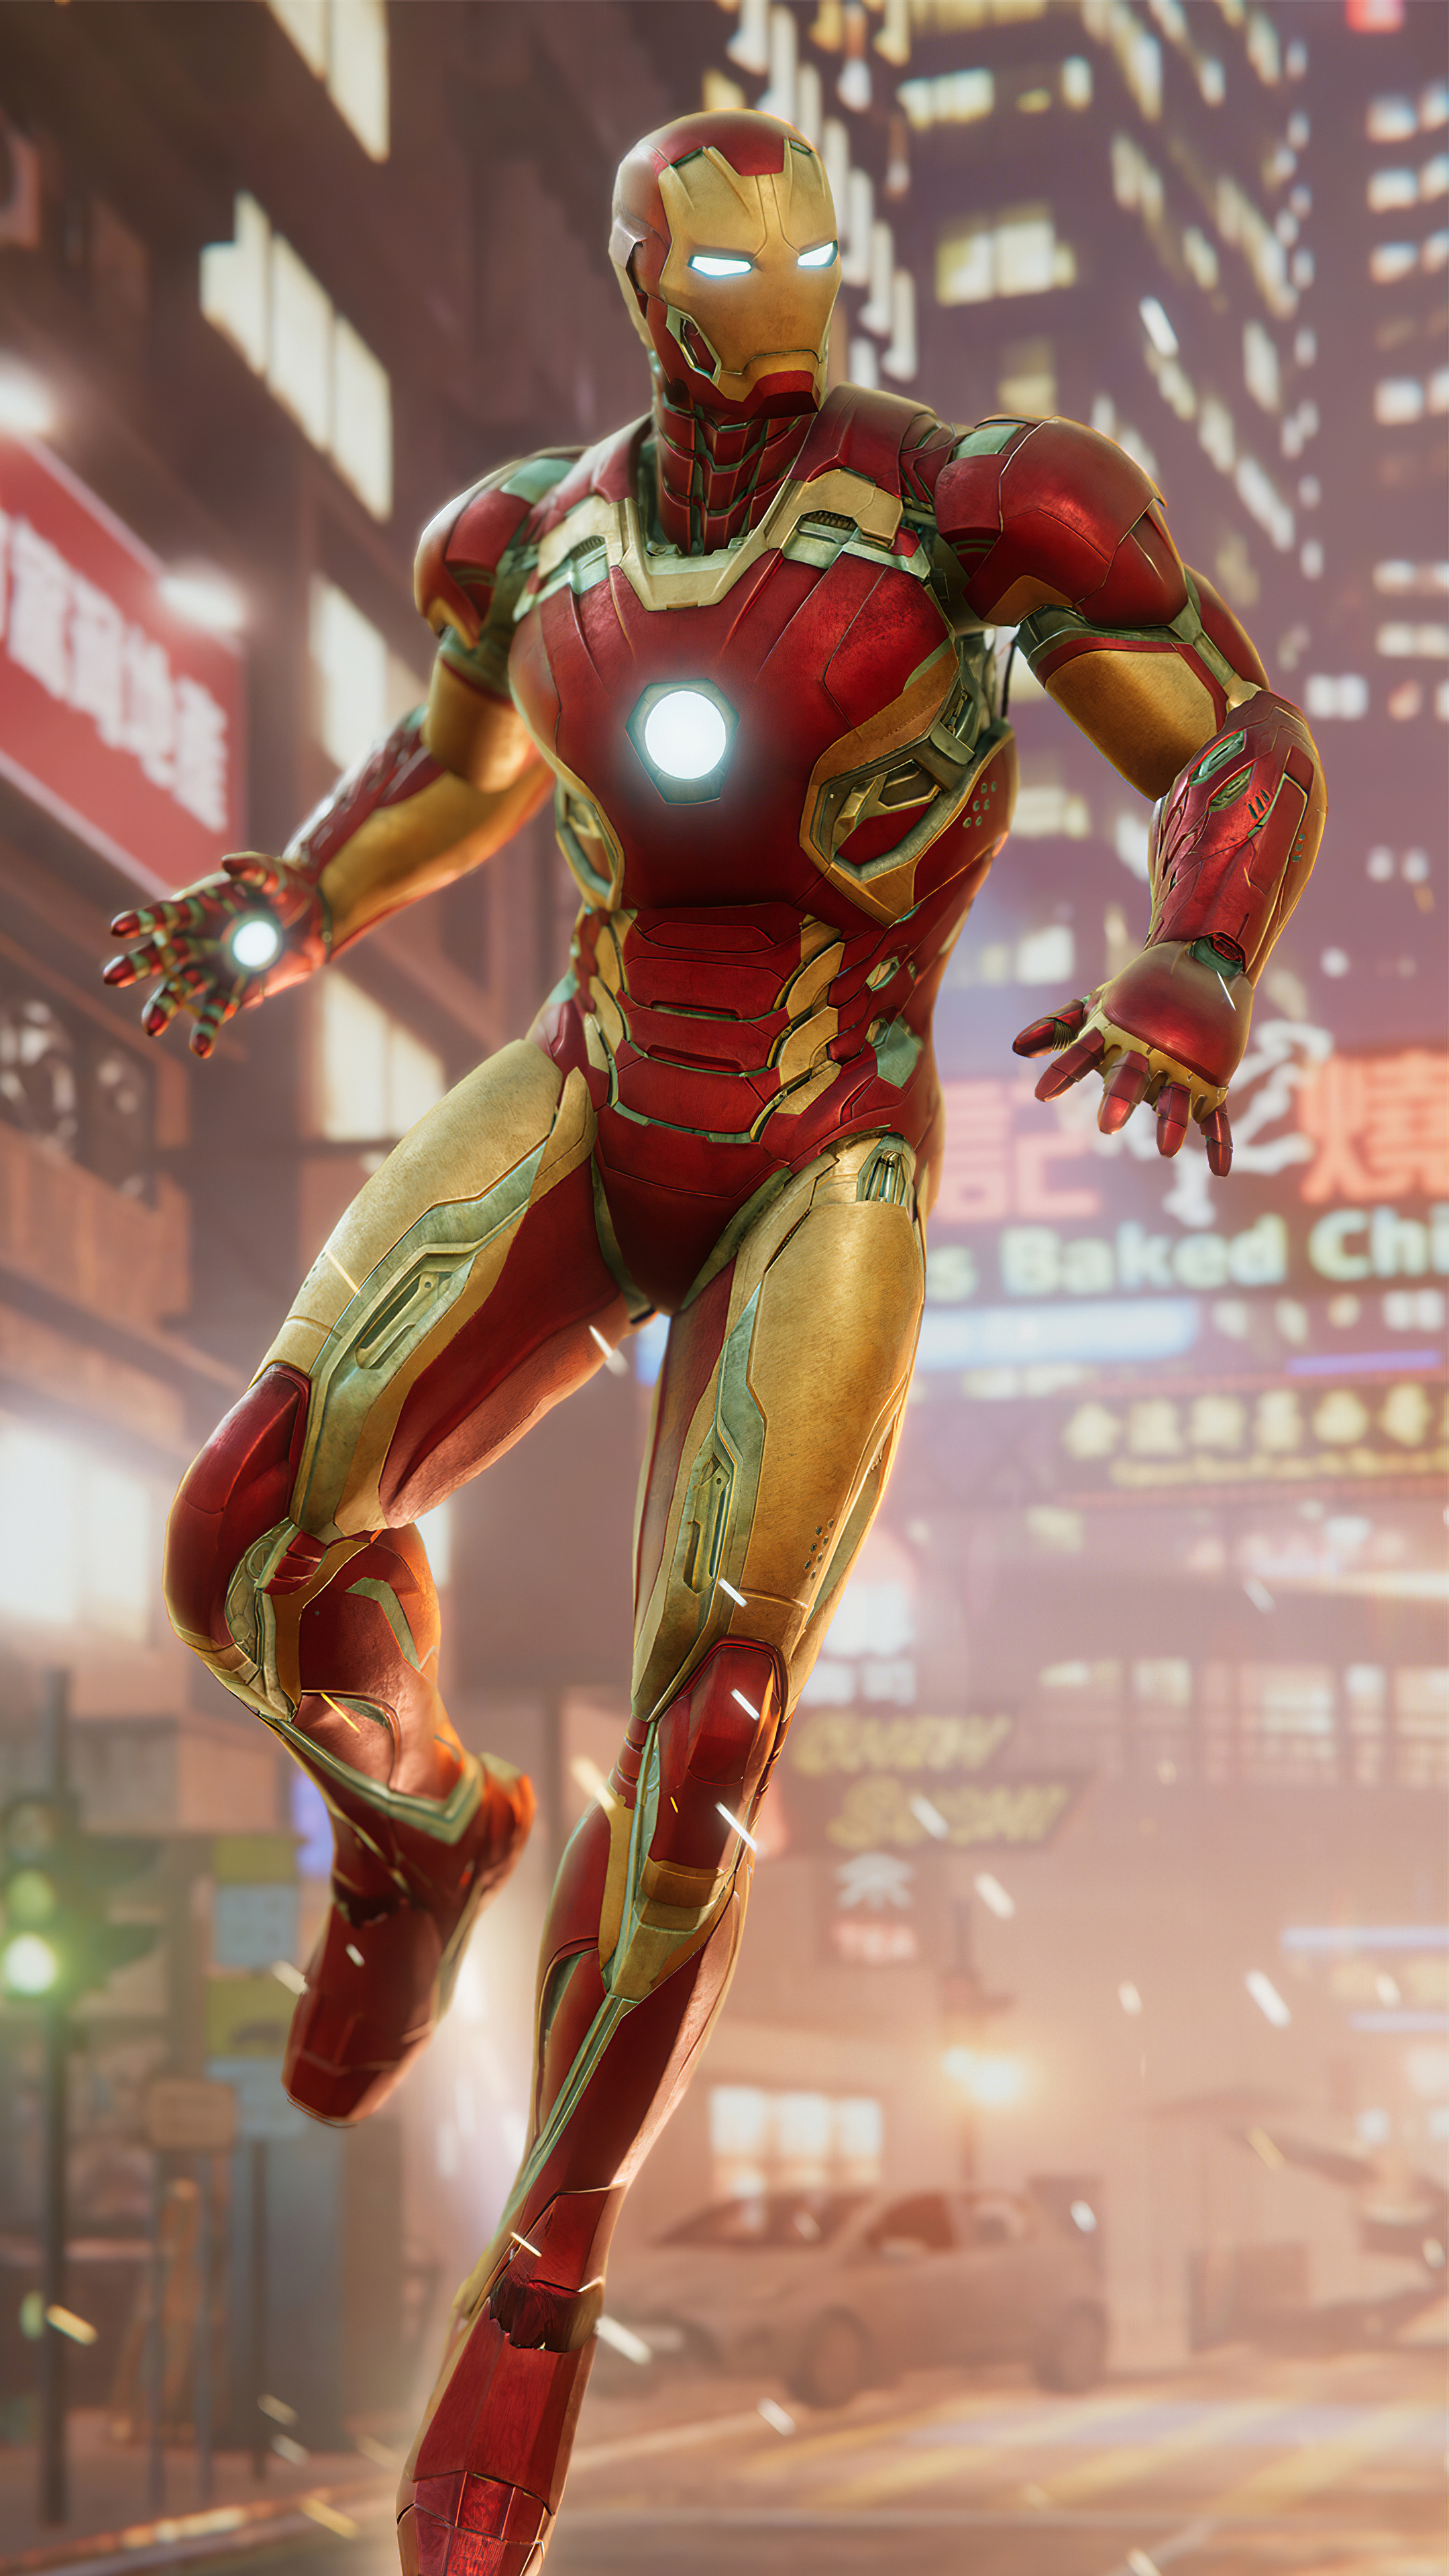 Iron Man Suit, Sony Xperia, Premium HD, 4K wallpapers, 2160x3840 4K Handy